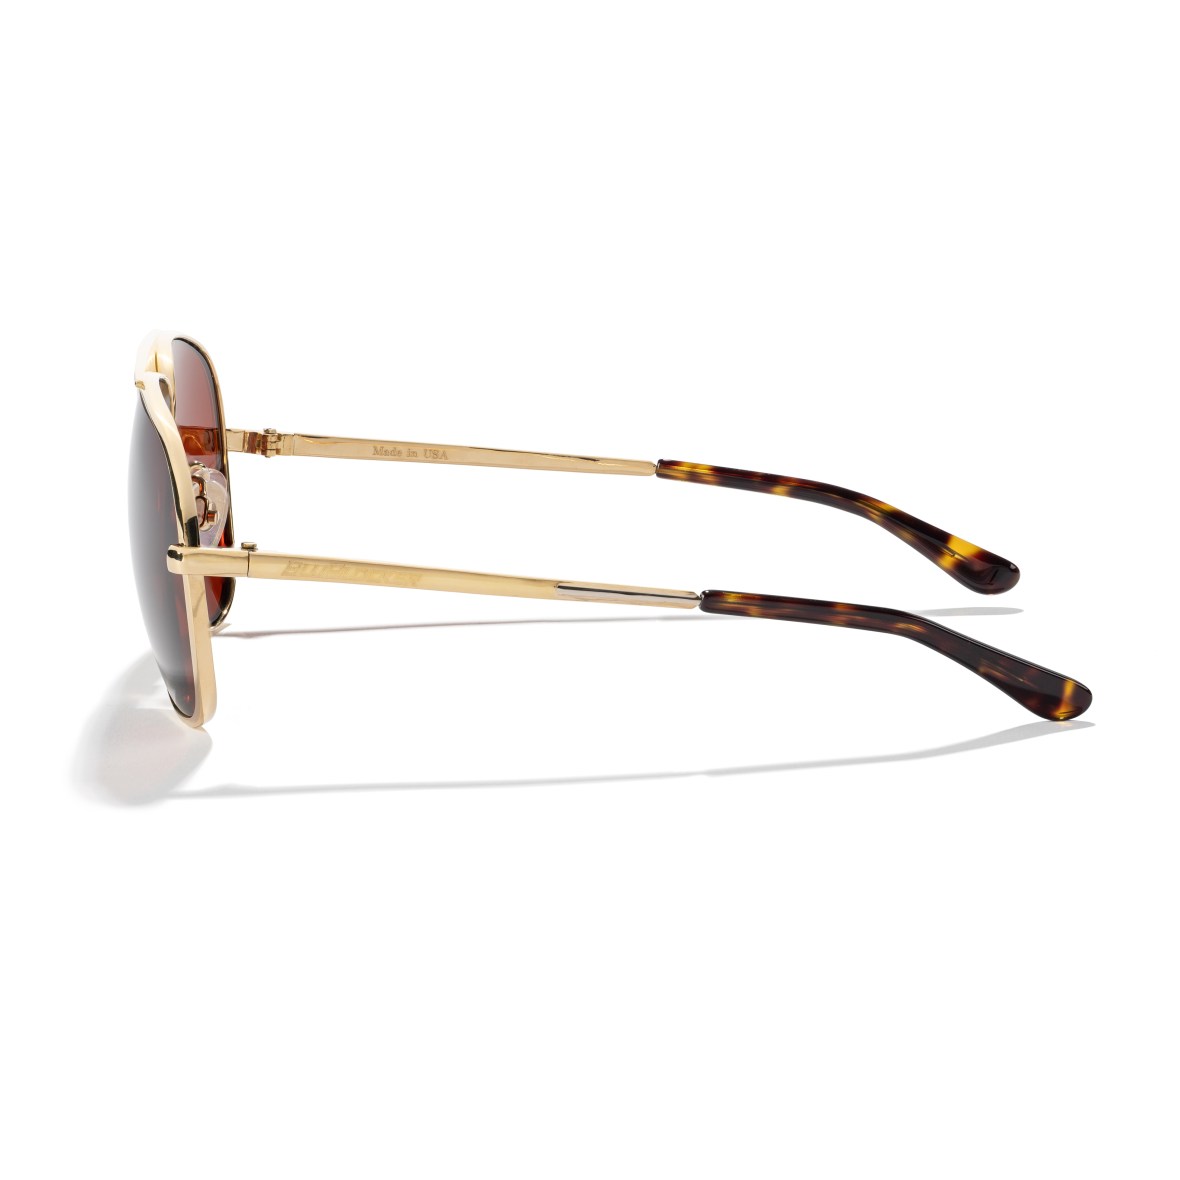 BluBlocker Is Making Solid Gold Sunglasses That Cost $20,000 - Maxim